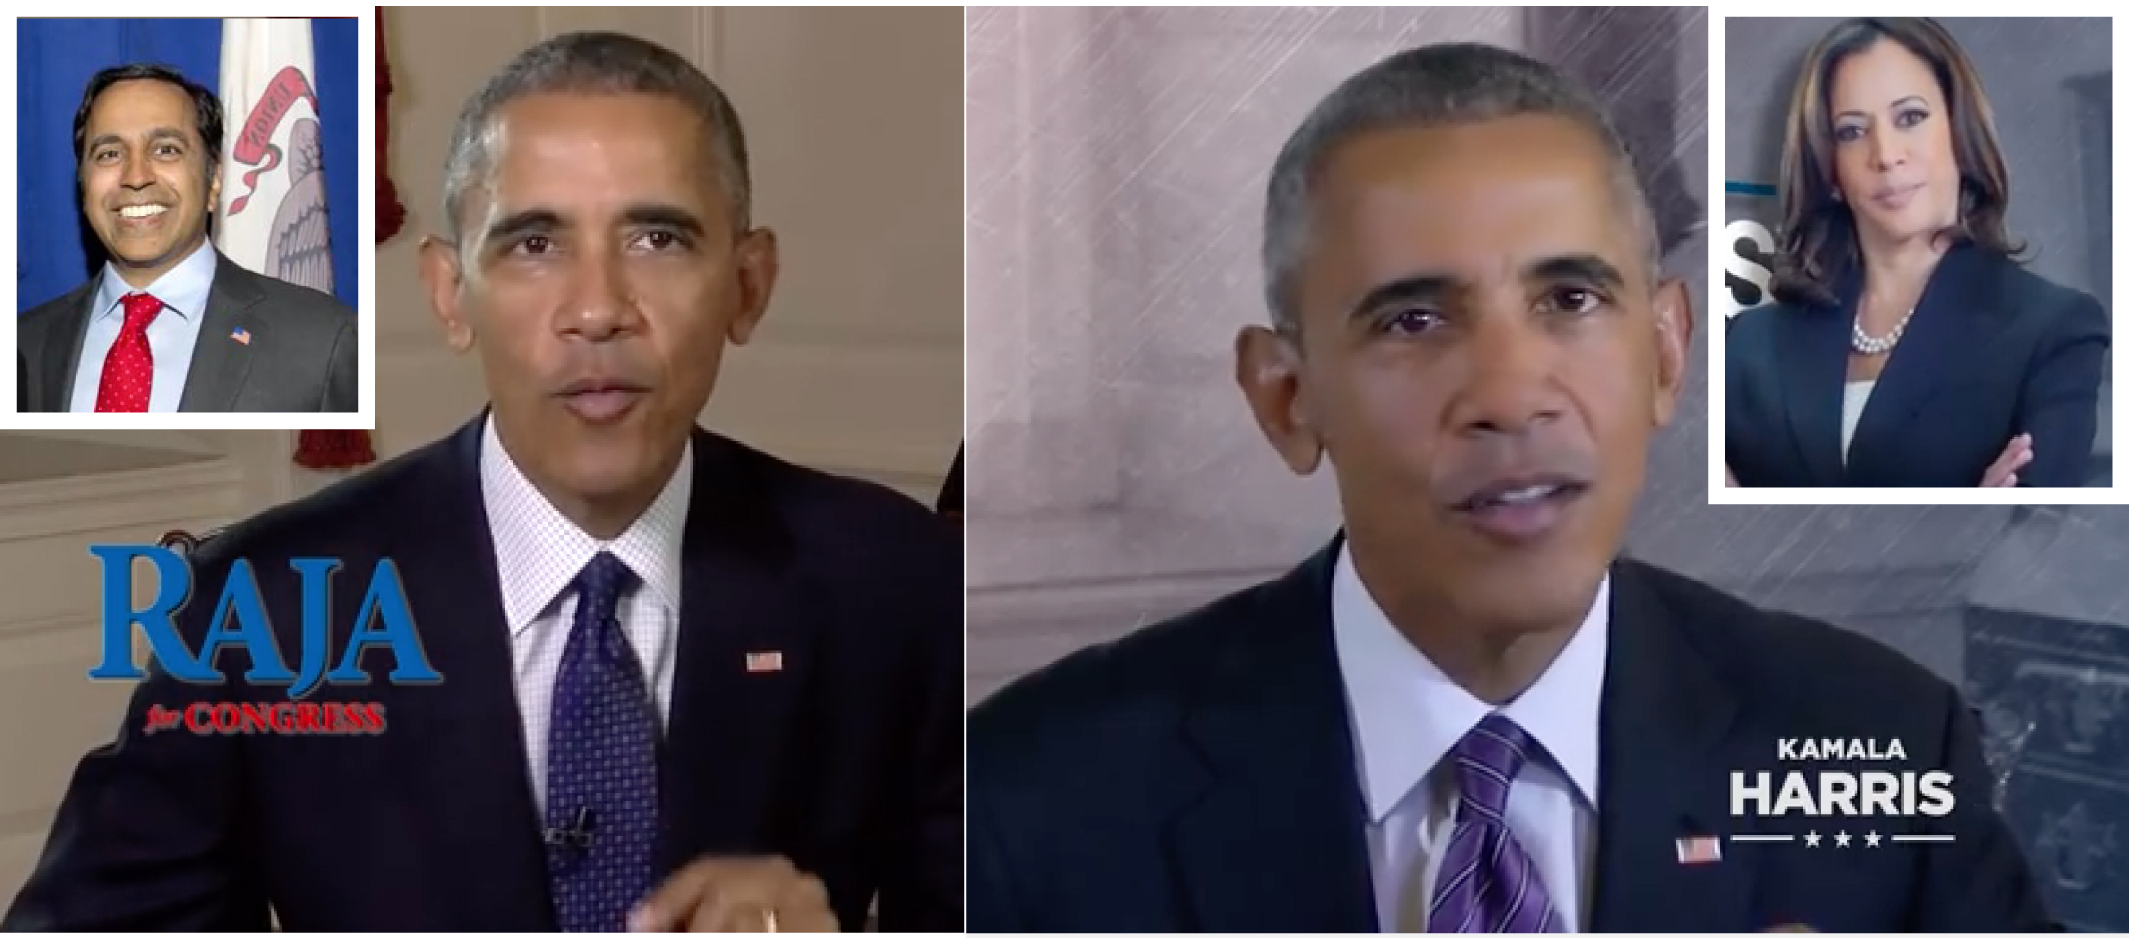 President Obama endorses  Kamala Harris & Raja Krishnamoorthy in video ads